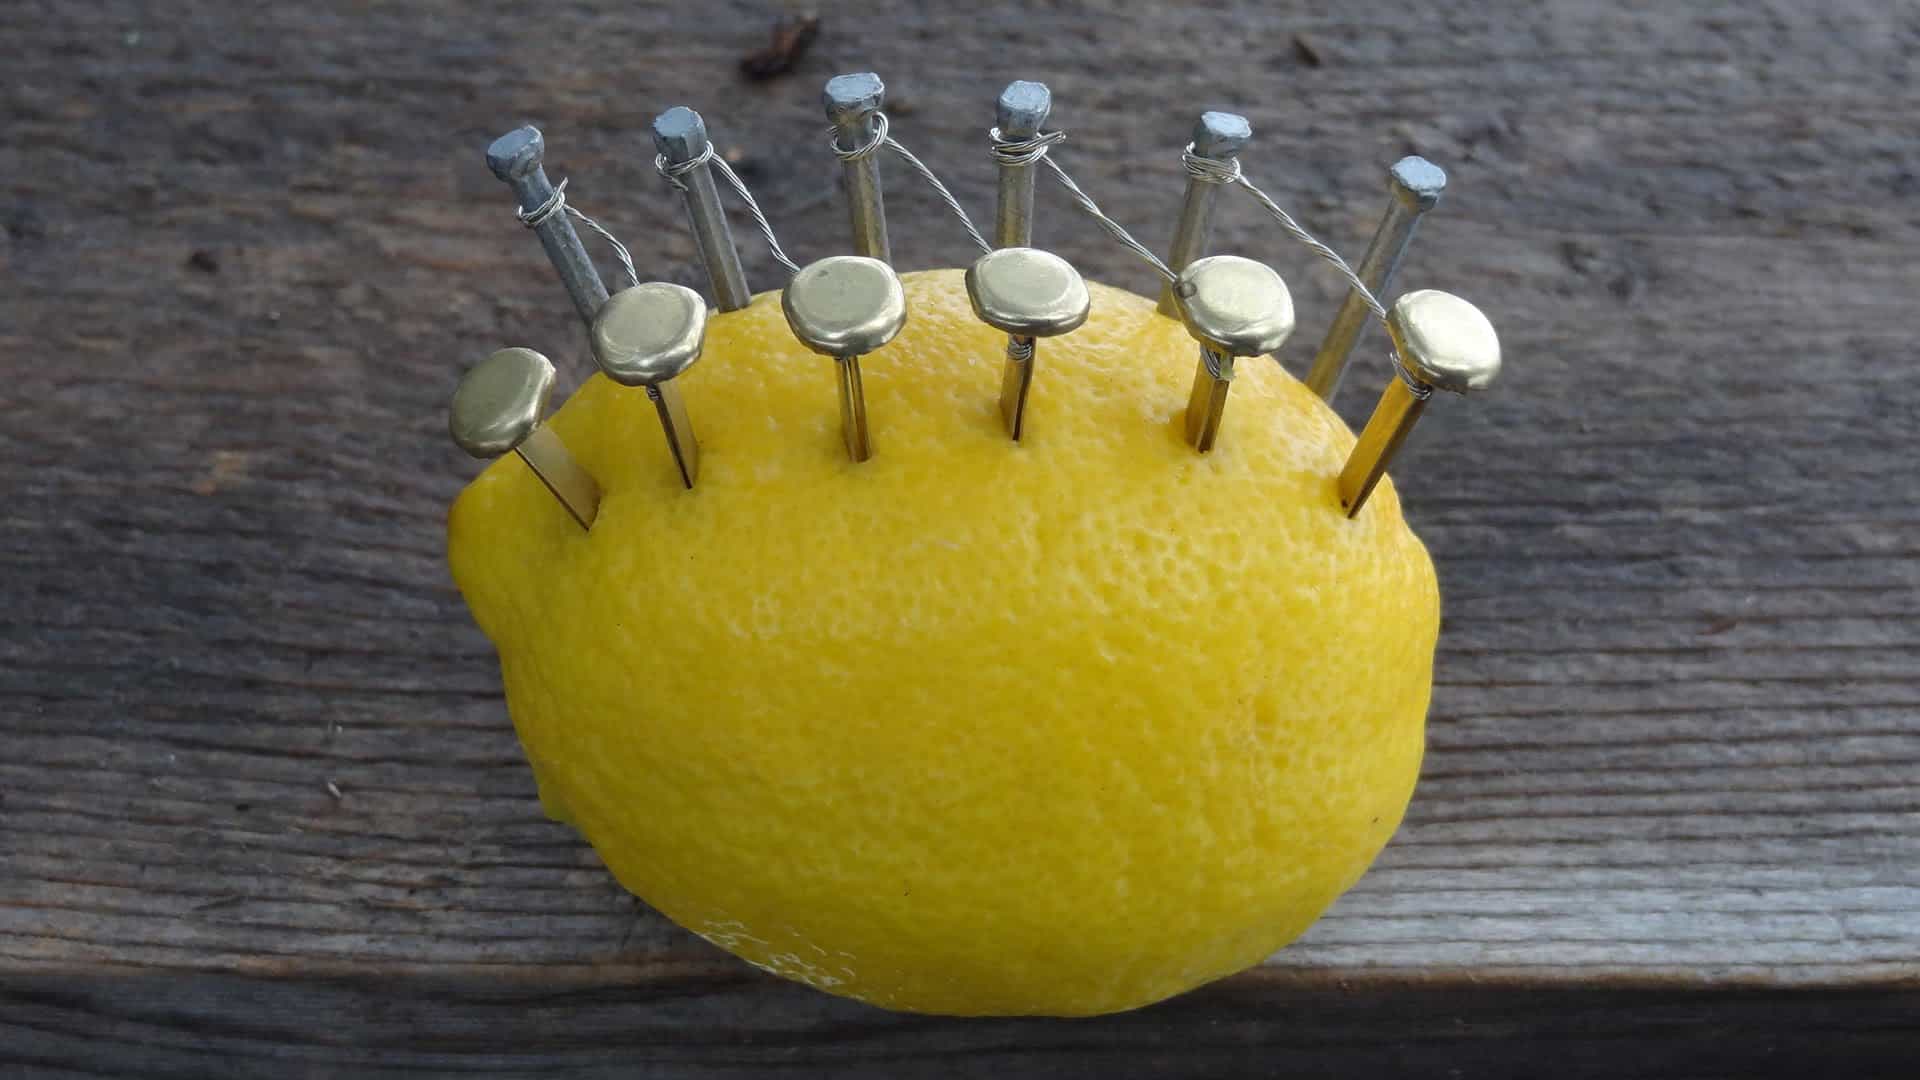 How to make a fire with a lemon